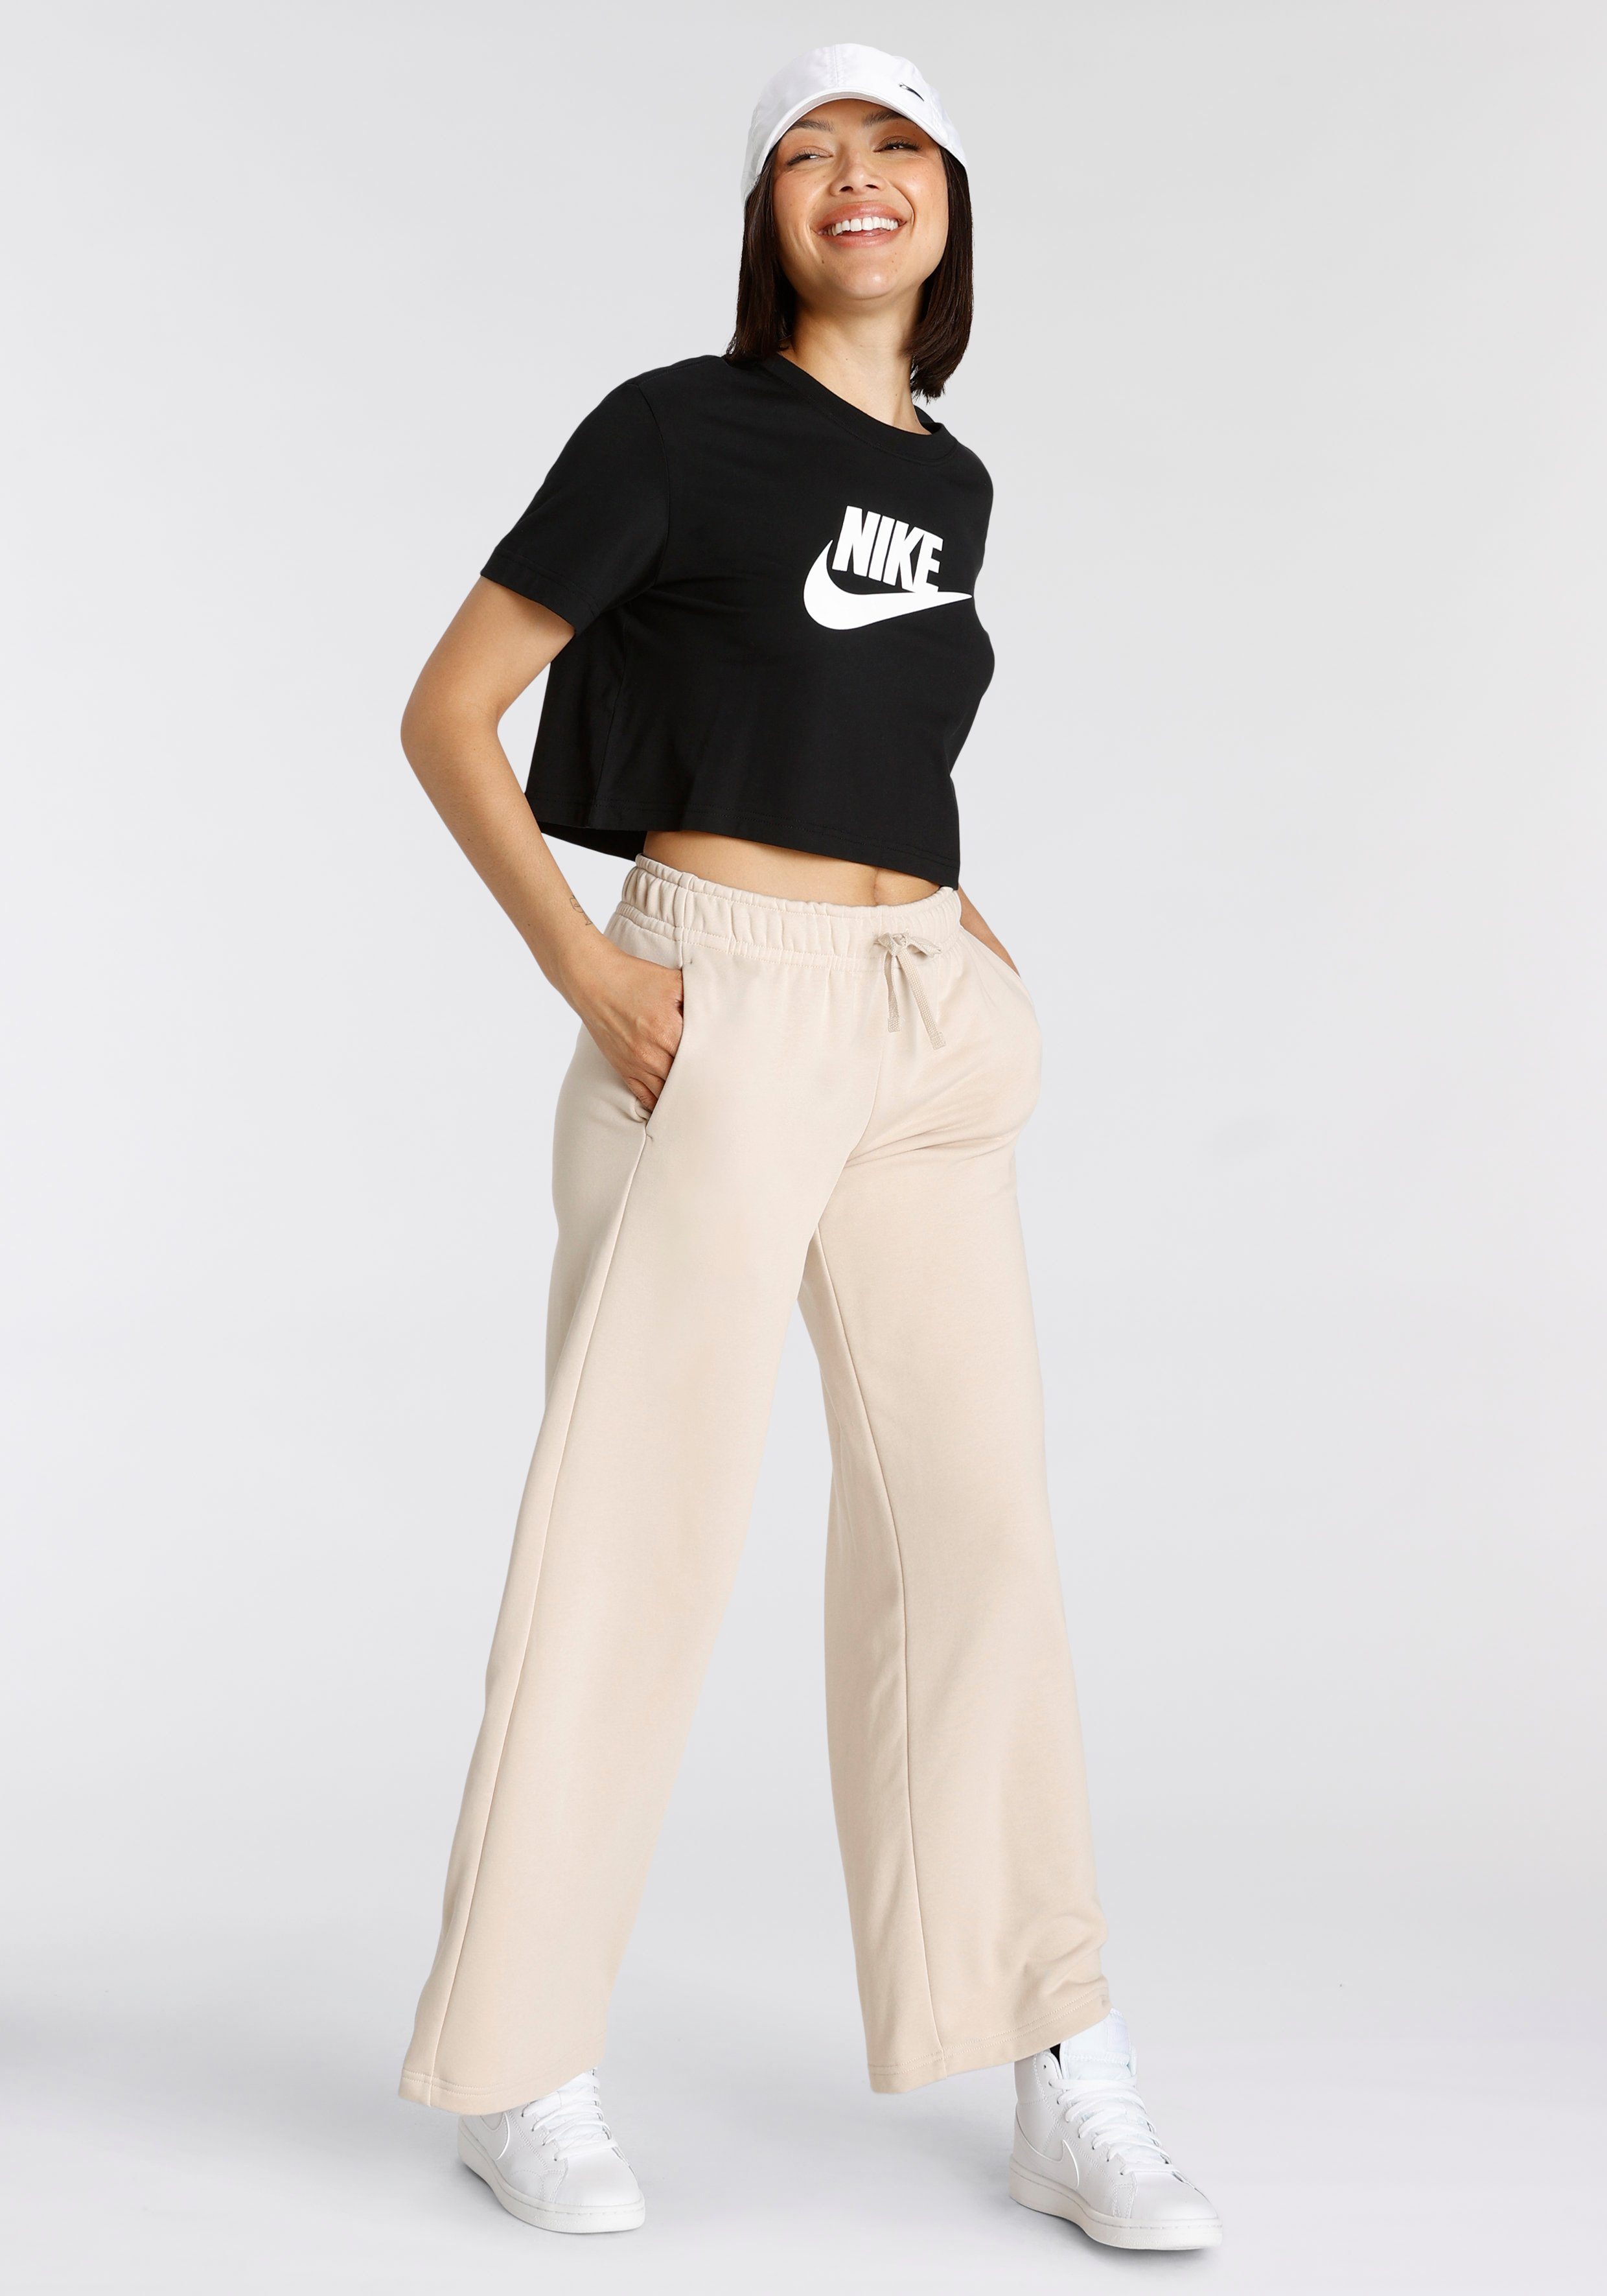 WOMEN'S LOGO Sportswear CROPPED T-Shirt schwarzweiss T-SHIRT Nike ESSENTIAL